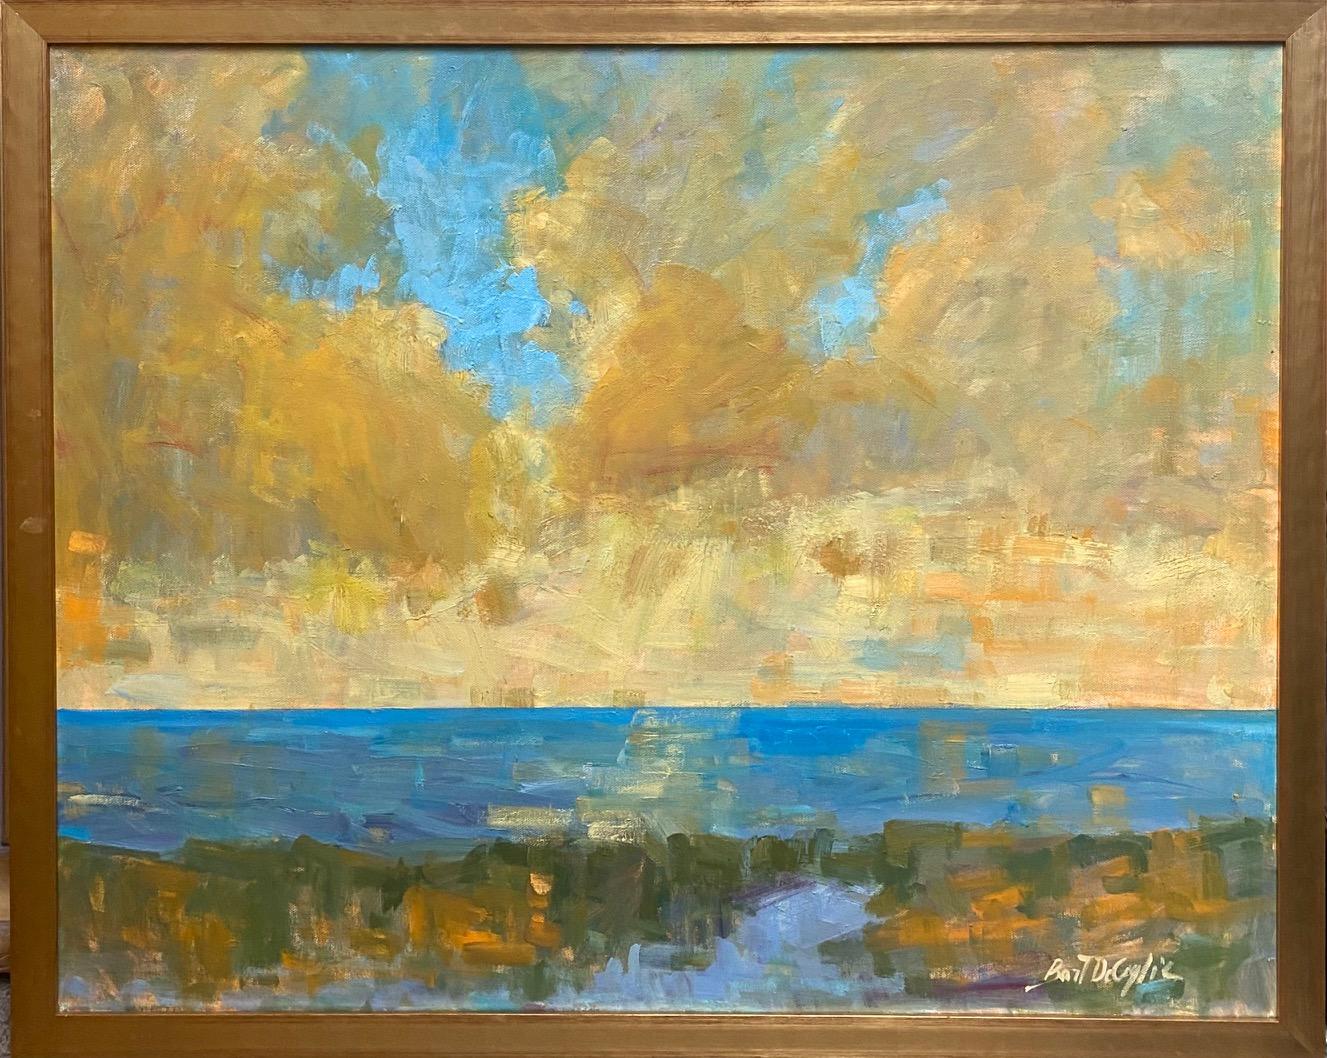 Bart DeCeglie Landscape Painting - Summer Sun, original abstract expressionist marine landscape